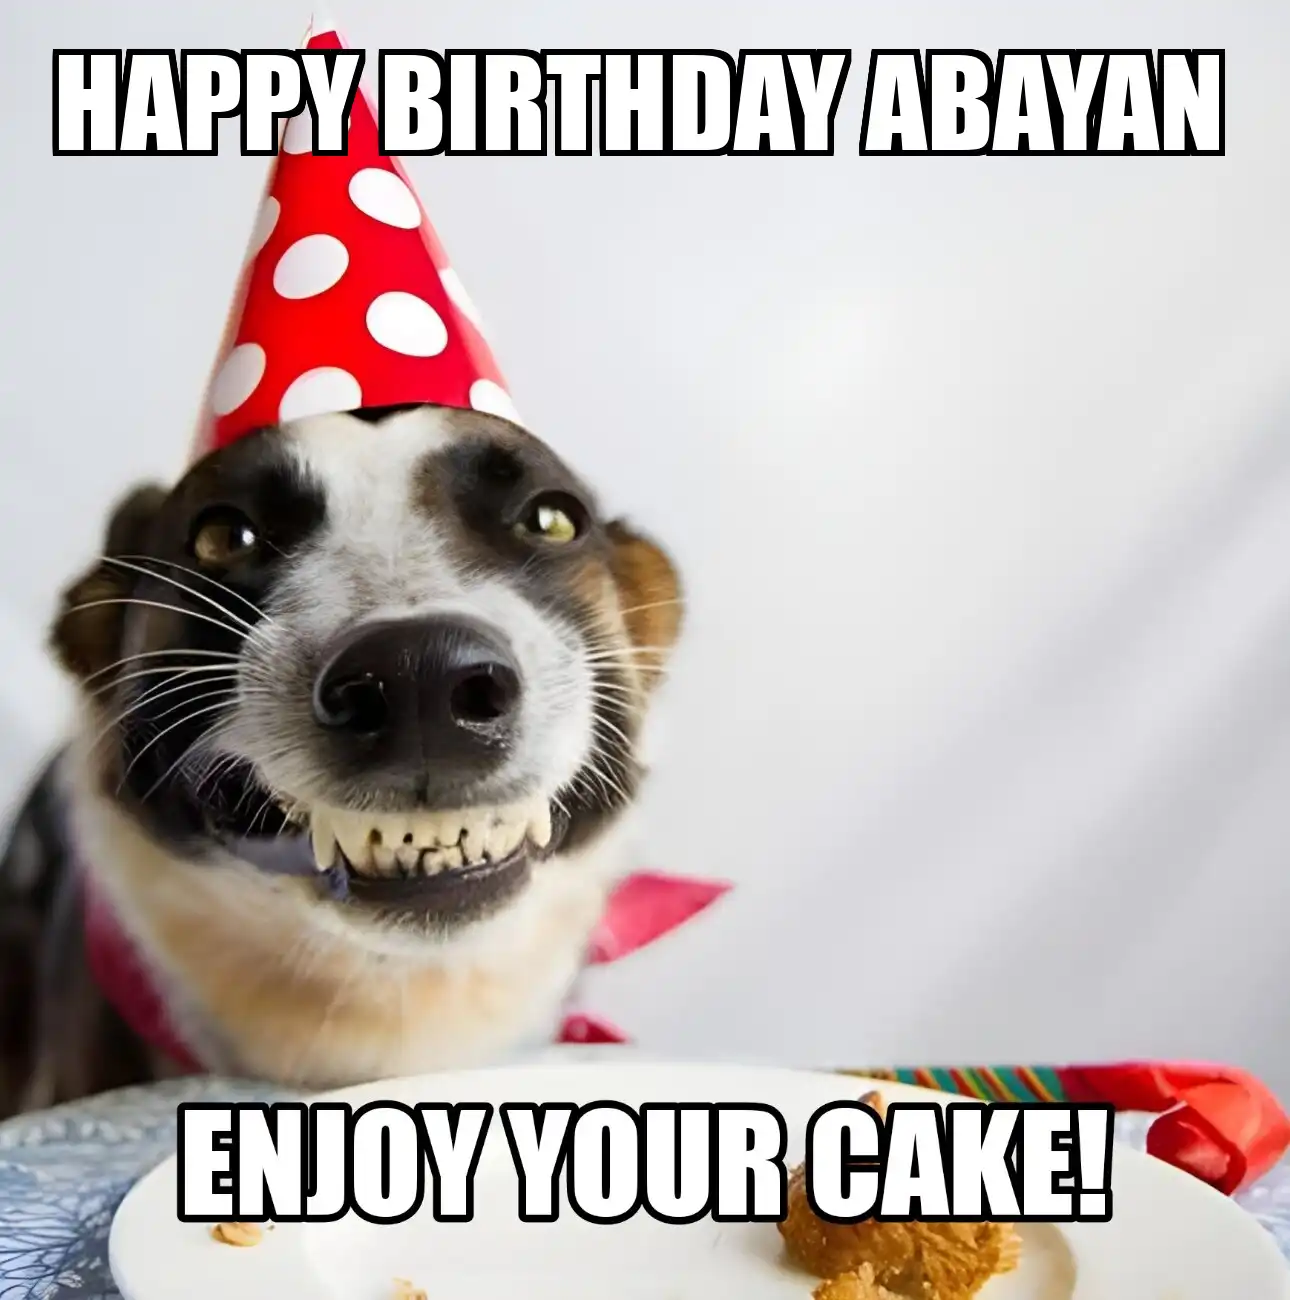 Happy Birthday Abayan Enjoy Your Cake Dog Meme